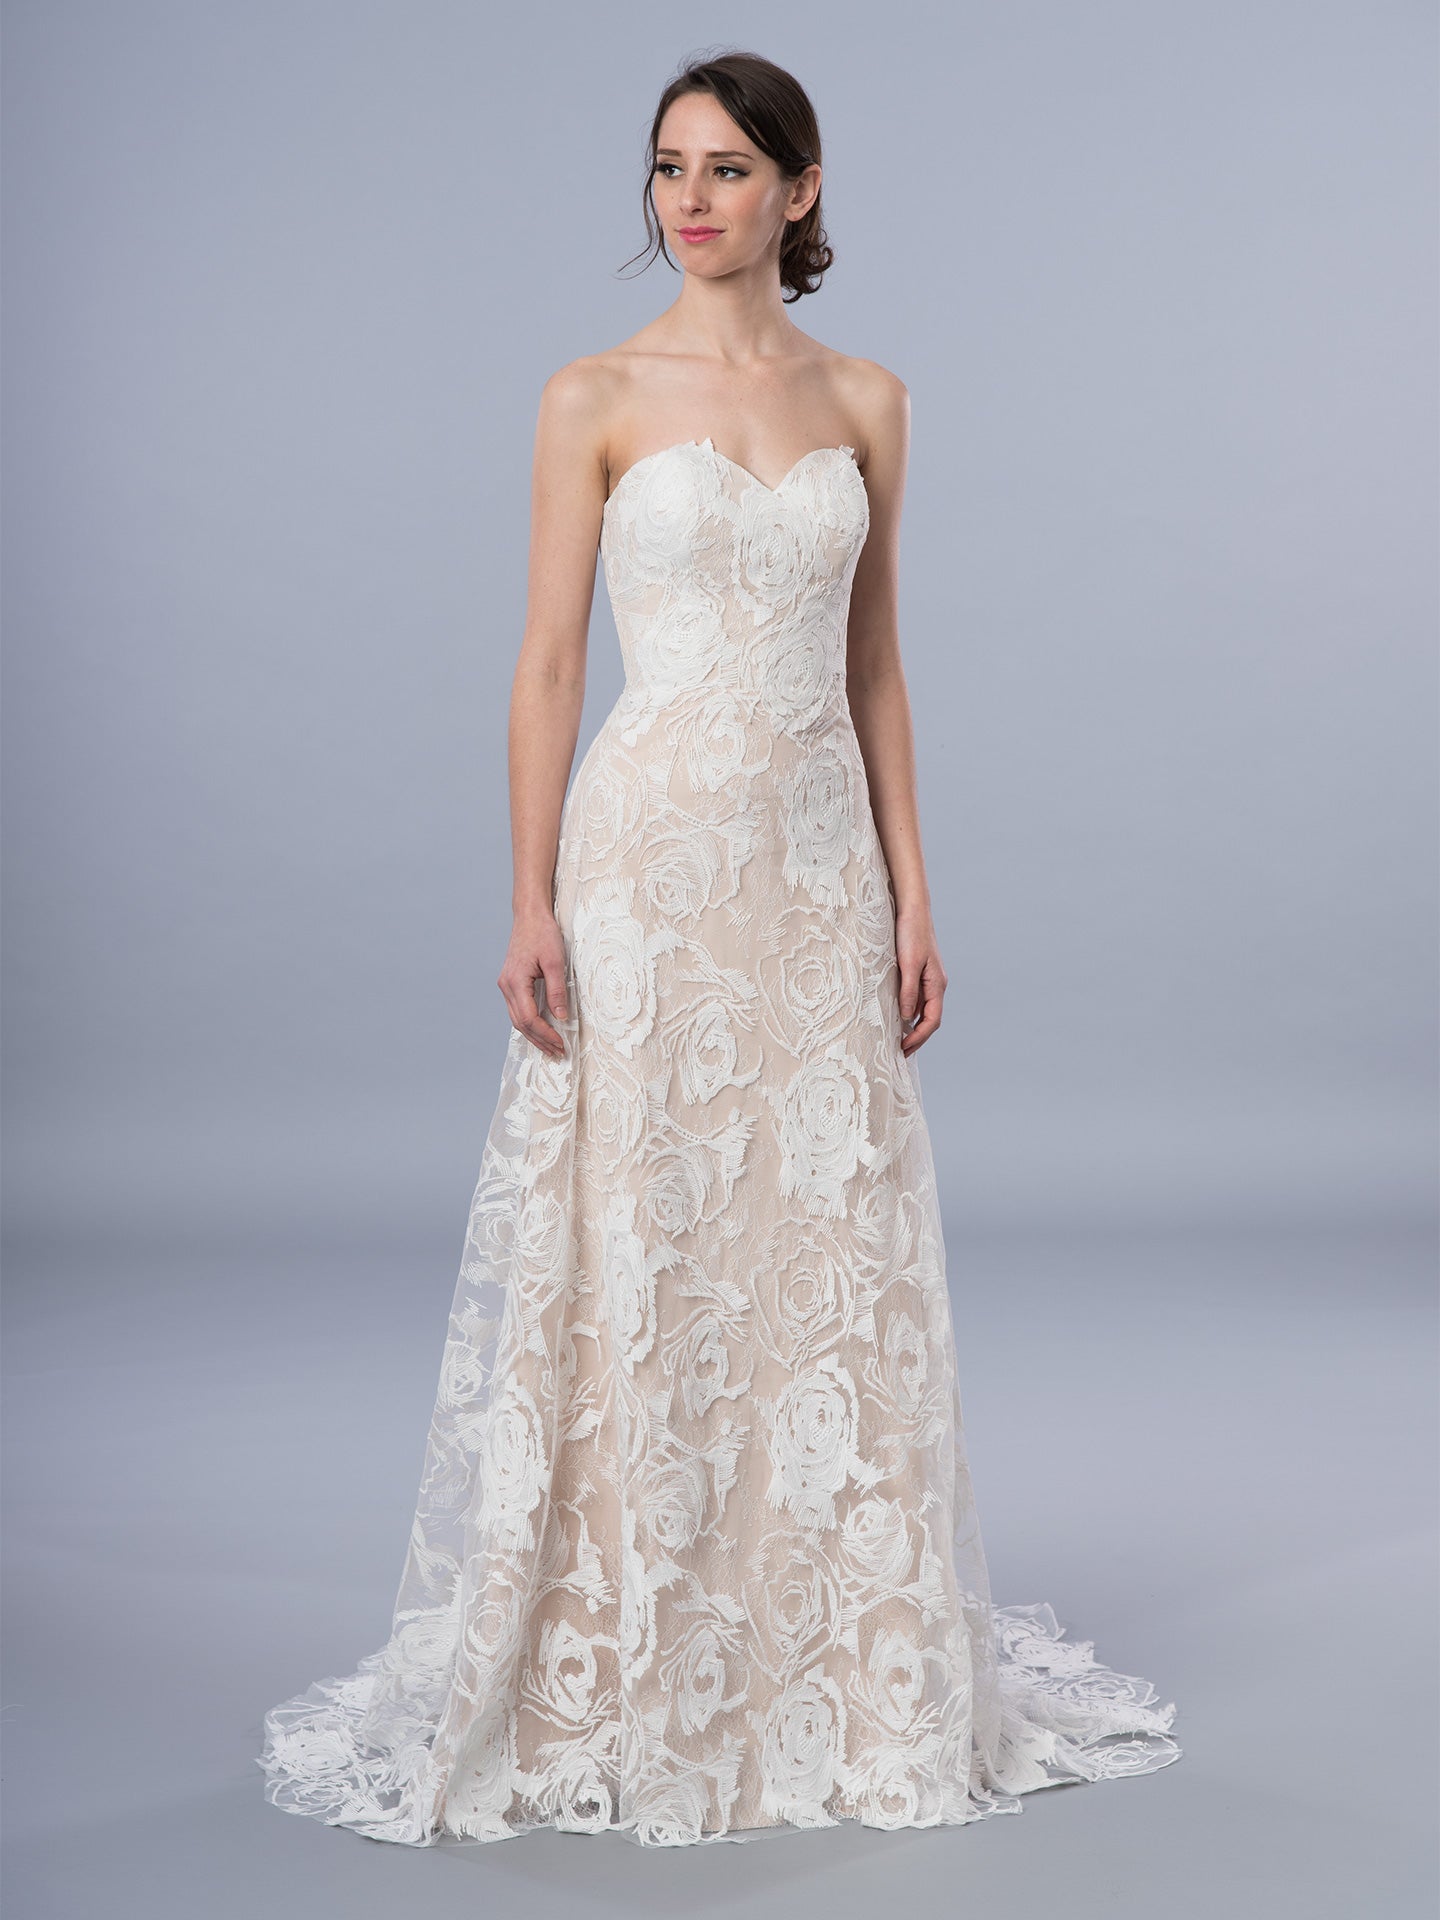 Boho lace wedding dress 4071-wedding-dress-4071